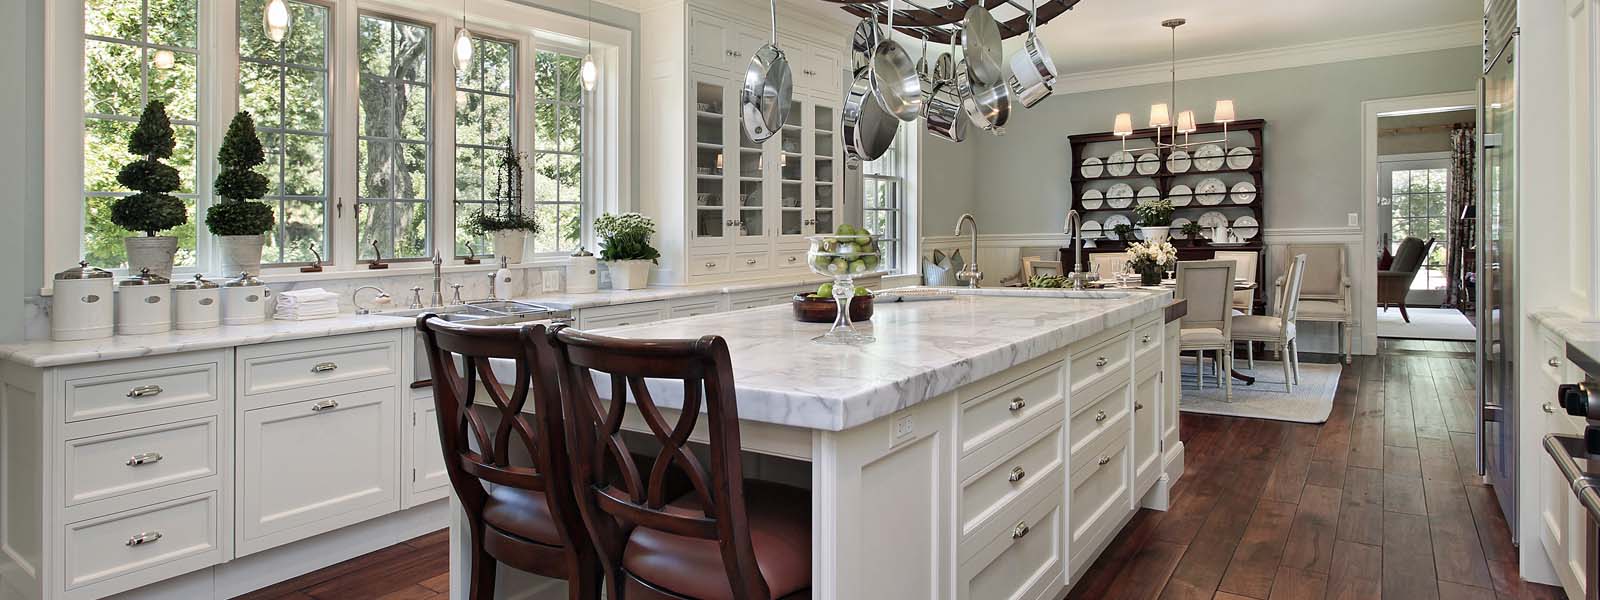 slider_0003_bigstock-Kitchen-in-luxury-home-with-wh-16568375